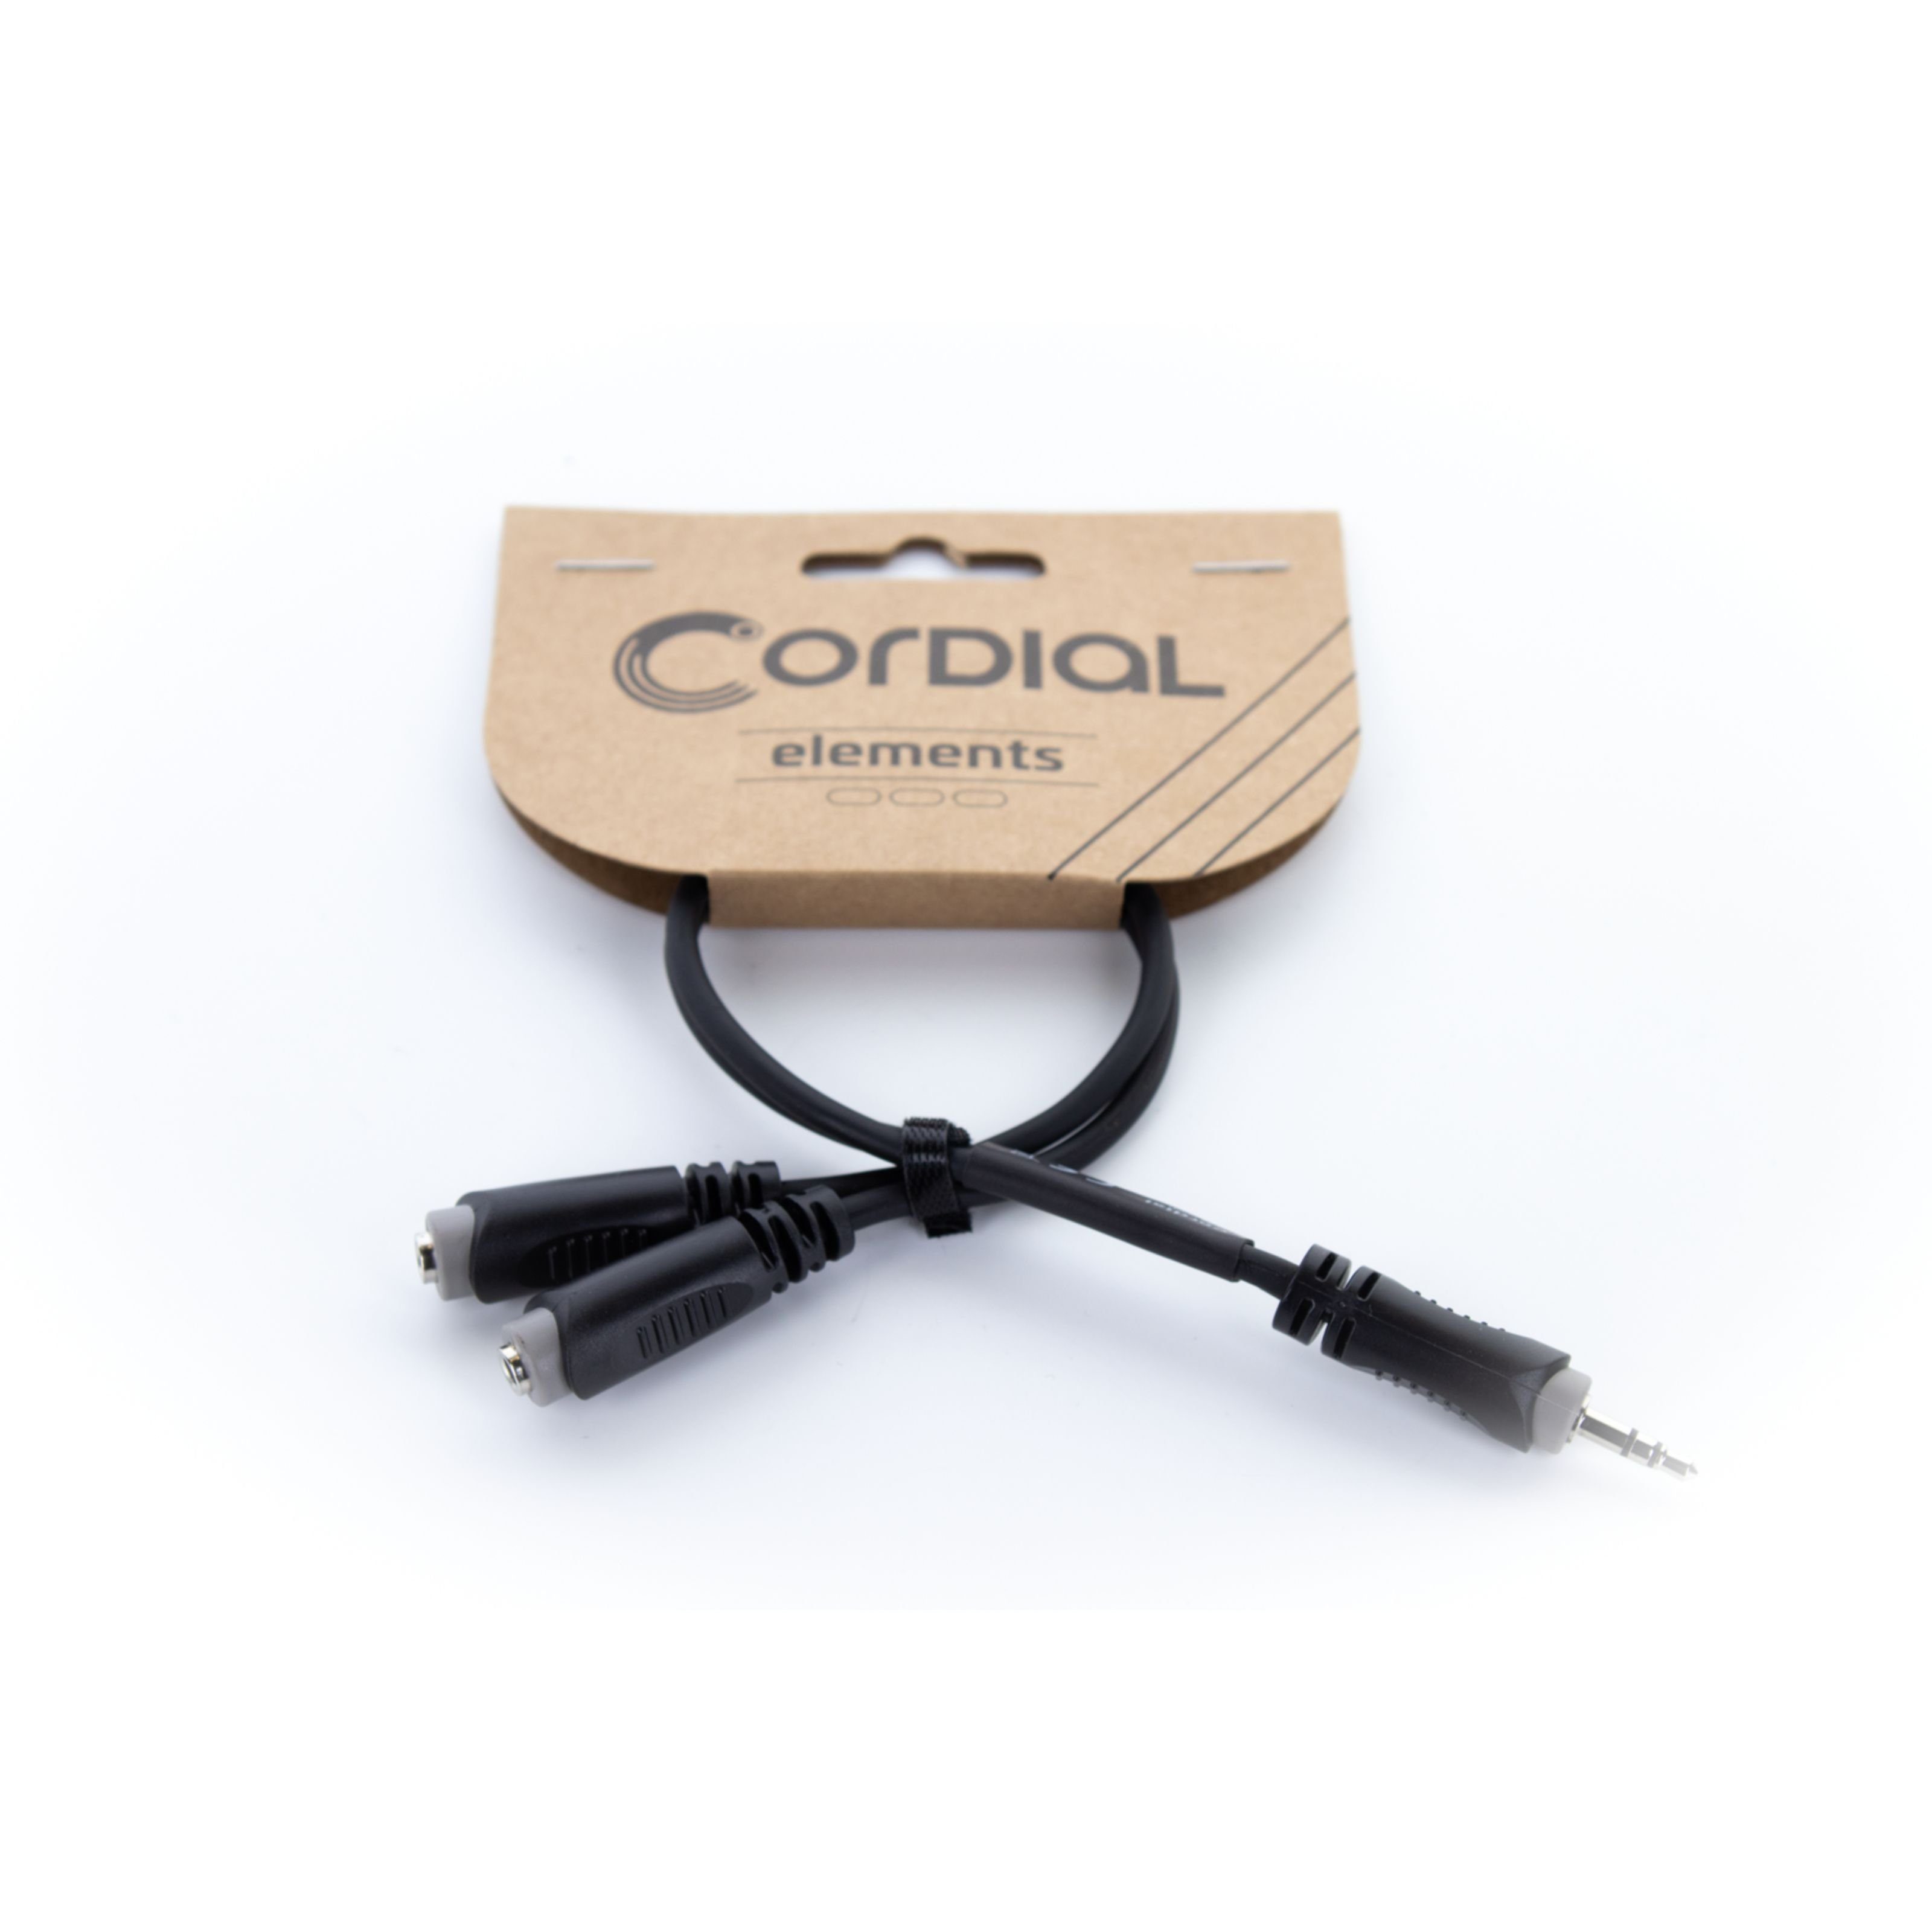 Cordial Spielzeug-Musikinstrument, EY 0.3 WYY m 0,3 Y-Adapterkabel Insertkabel 